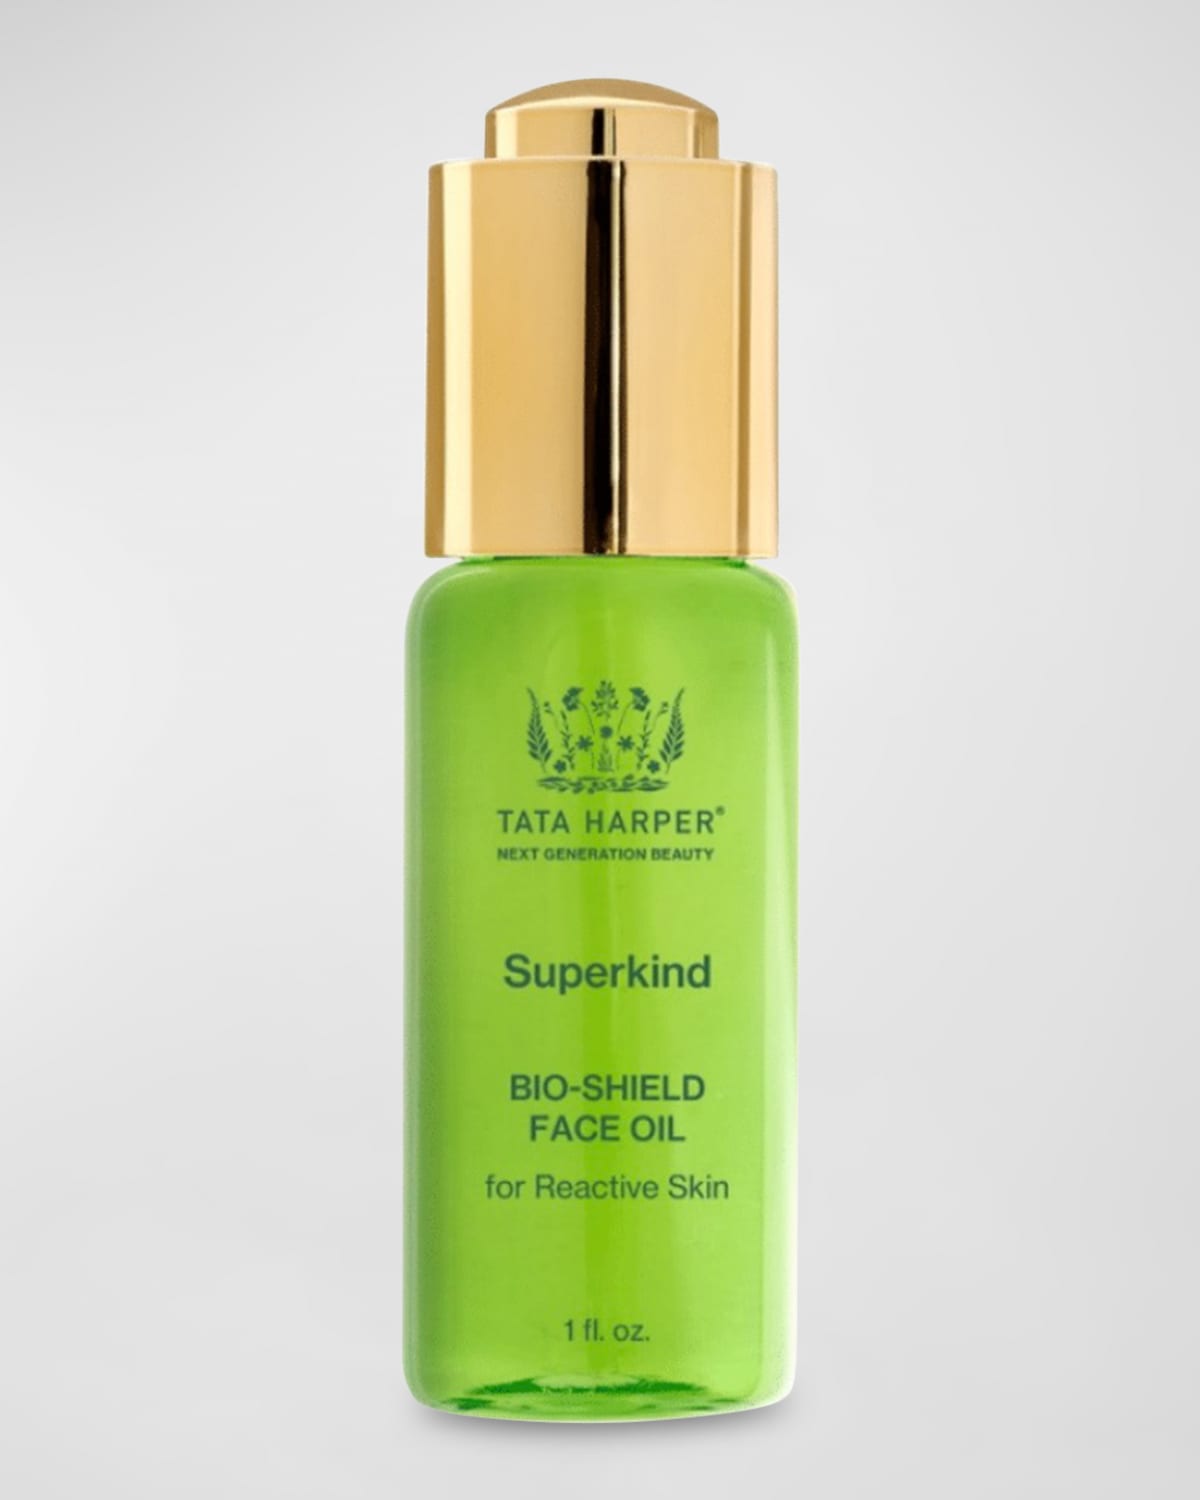 Superkind Bio-Shield Face Oil for Reactive Skin, 1 oz.